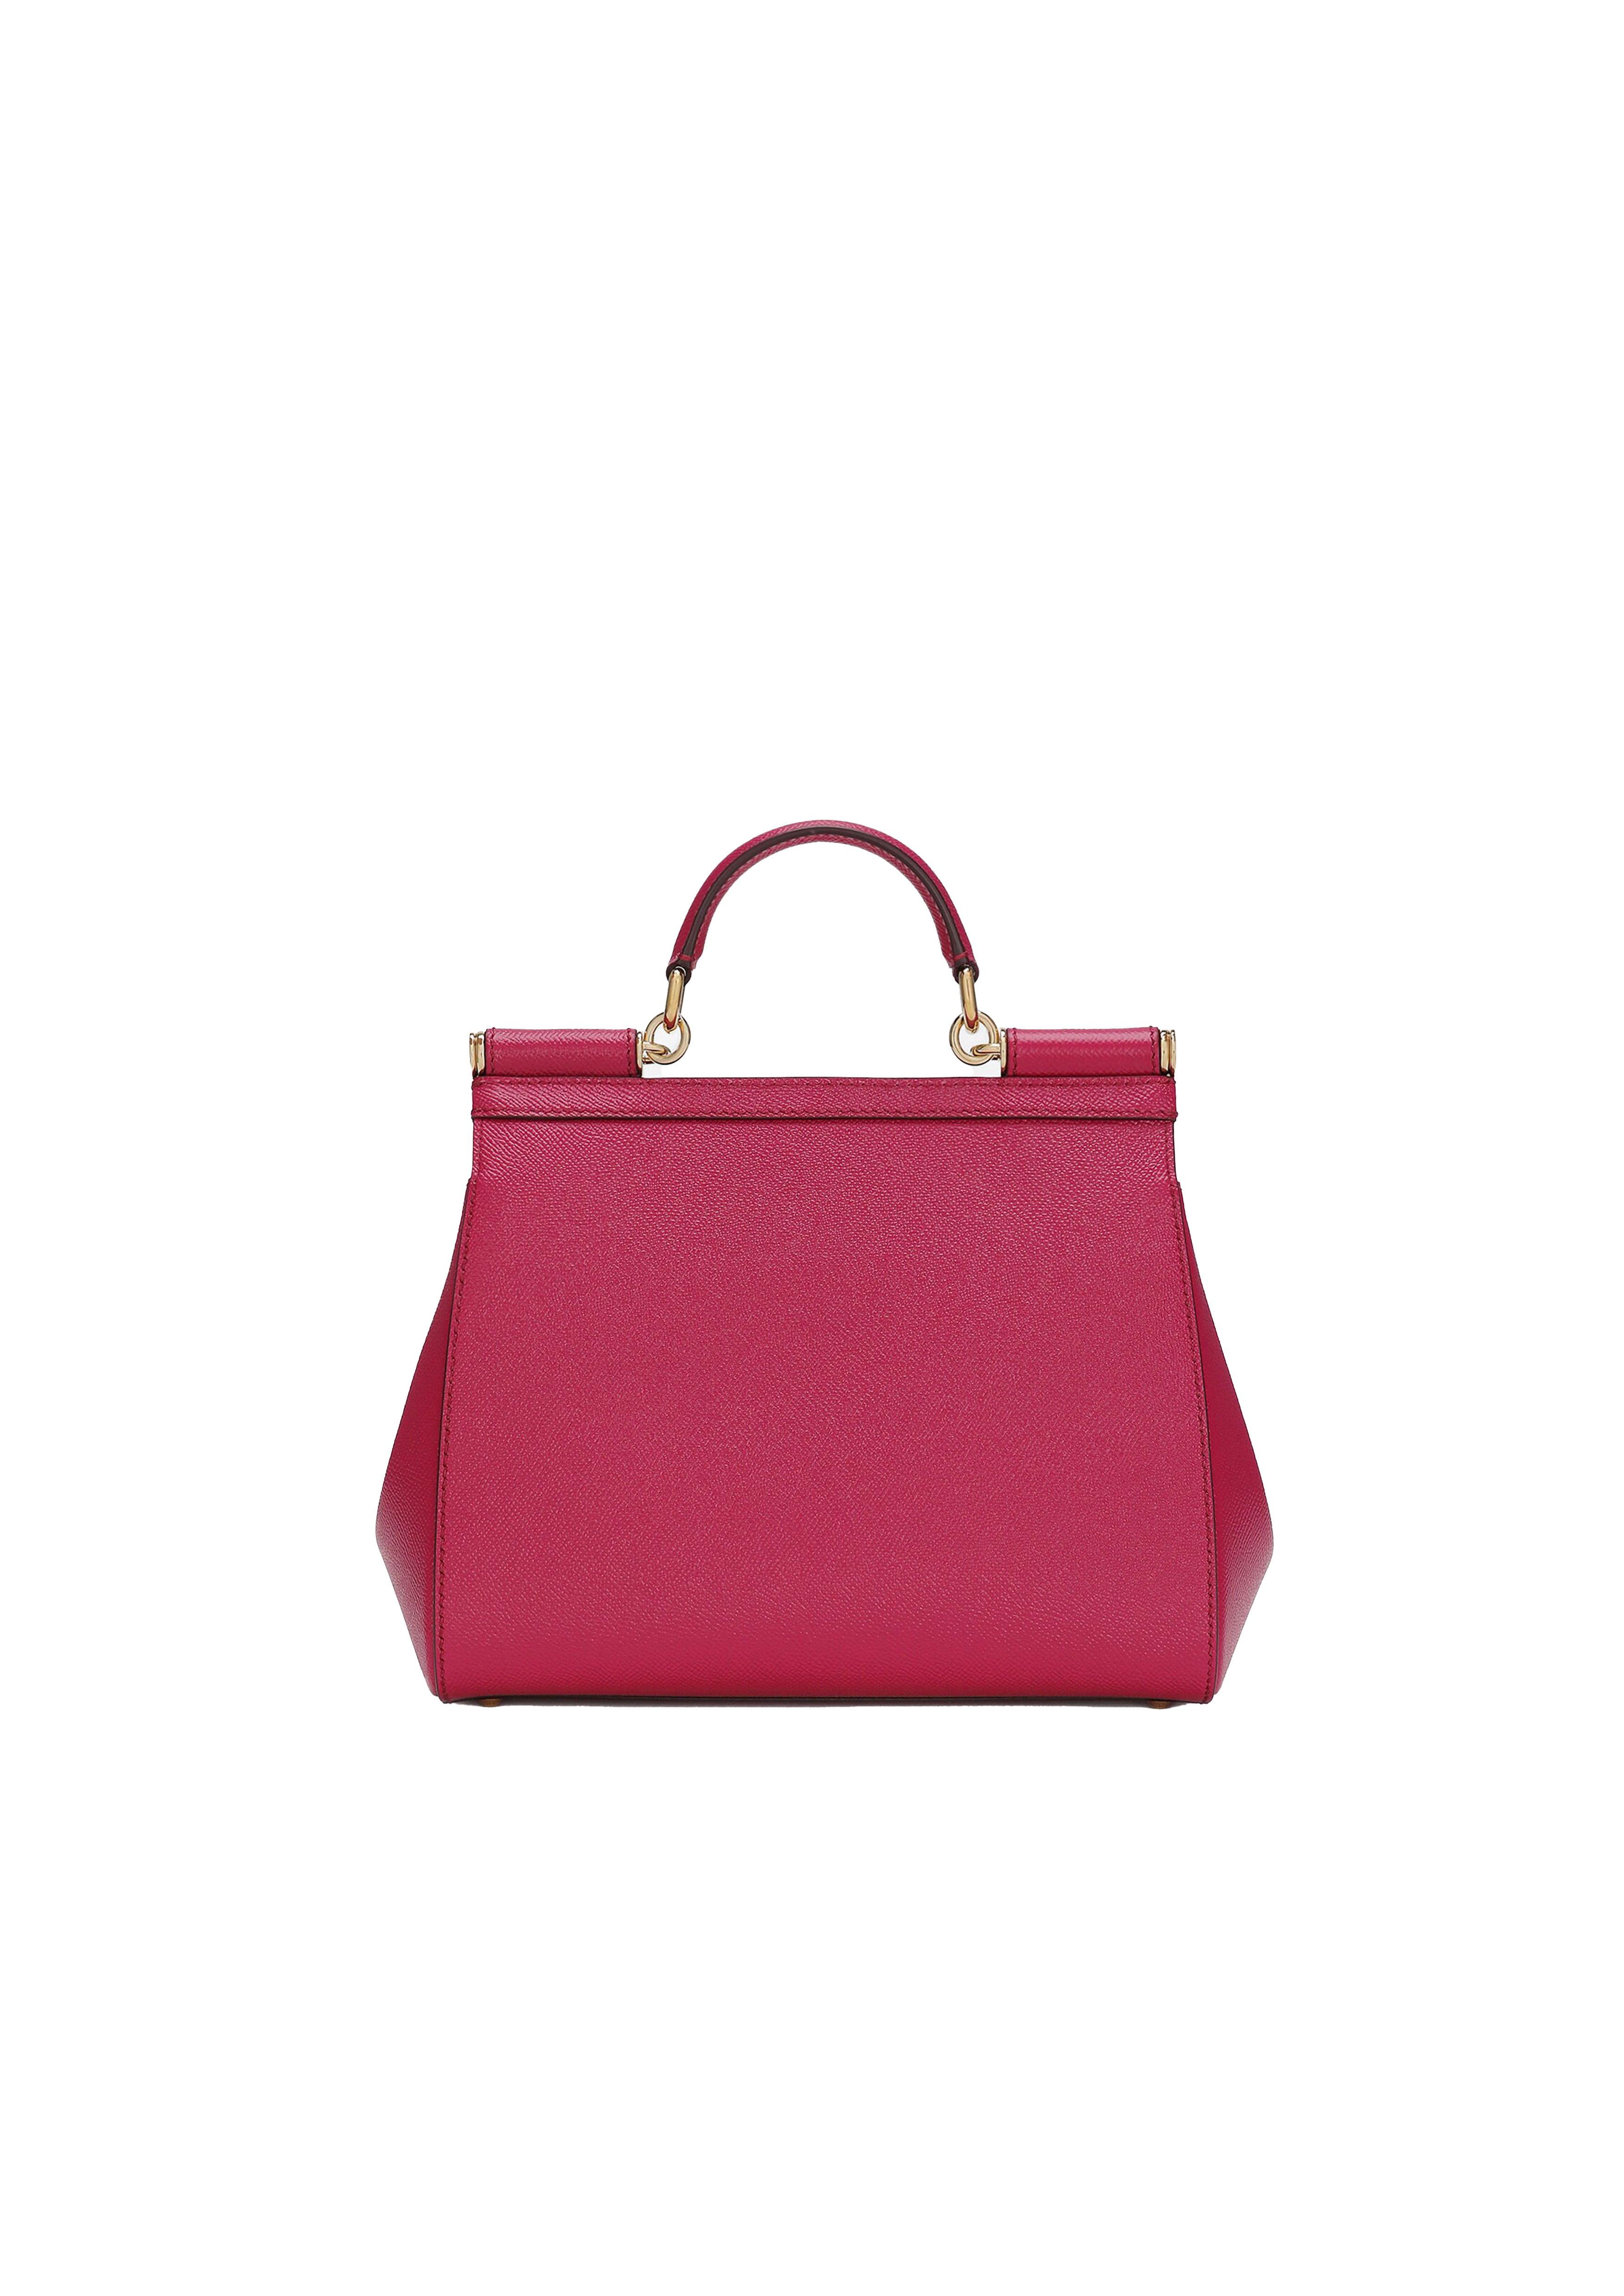 D&G Sicily bag purchased in Venice : r/handbags